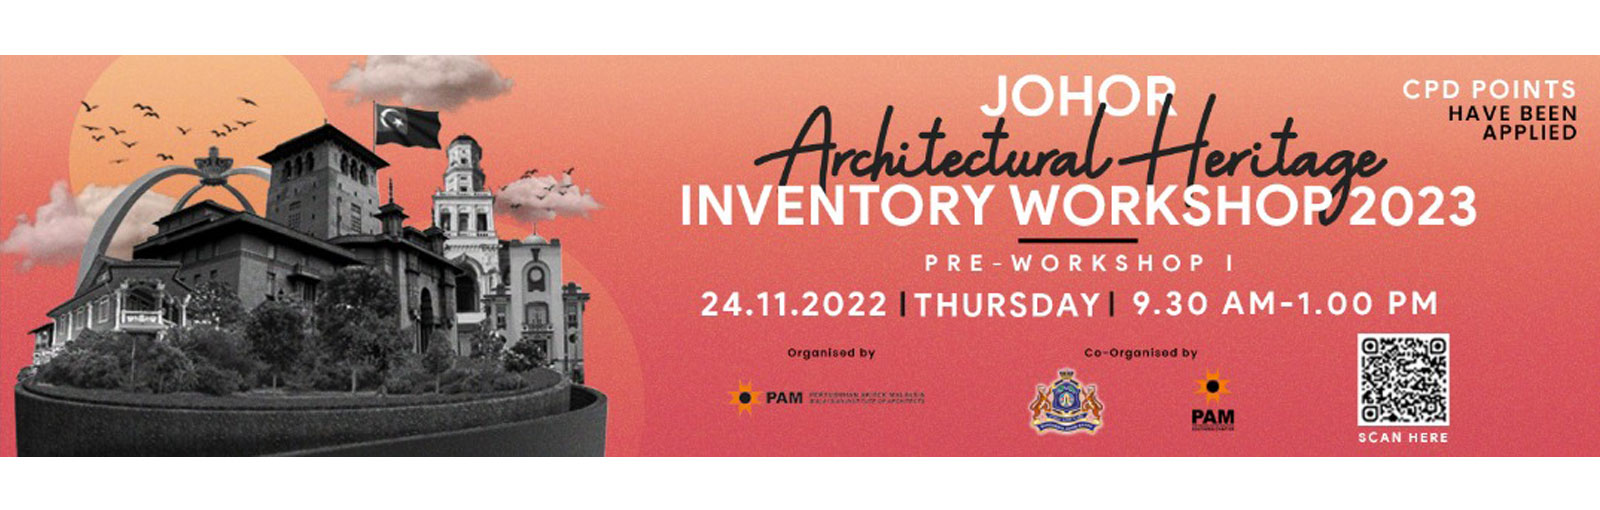 Johor Architectural Heritage Inventory Workshop 2023